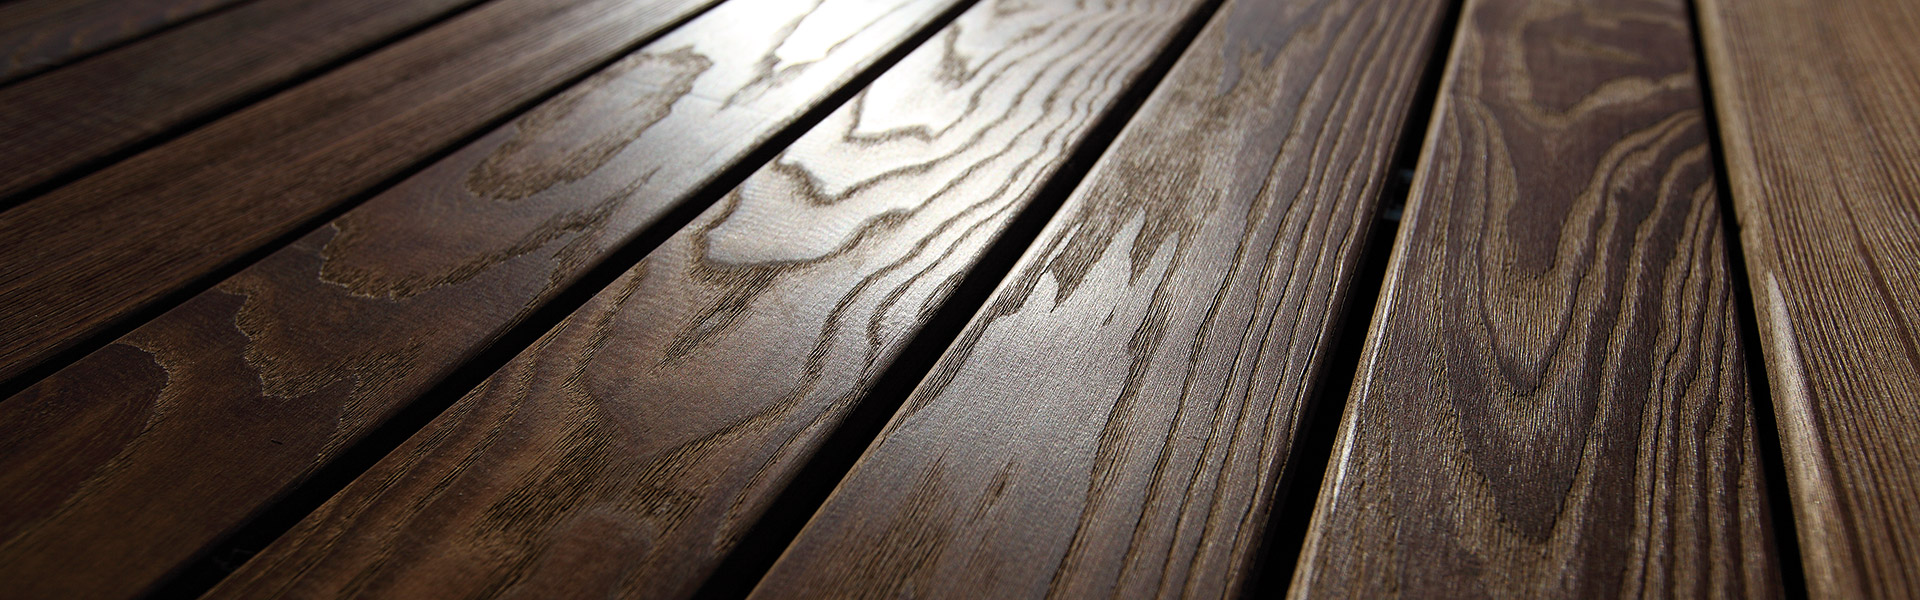 Fußboden aus Holz